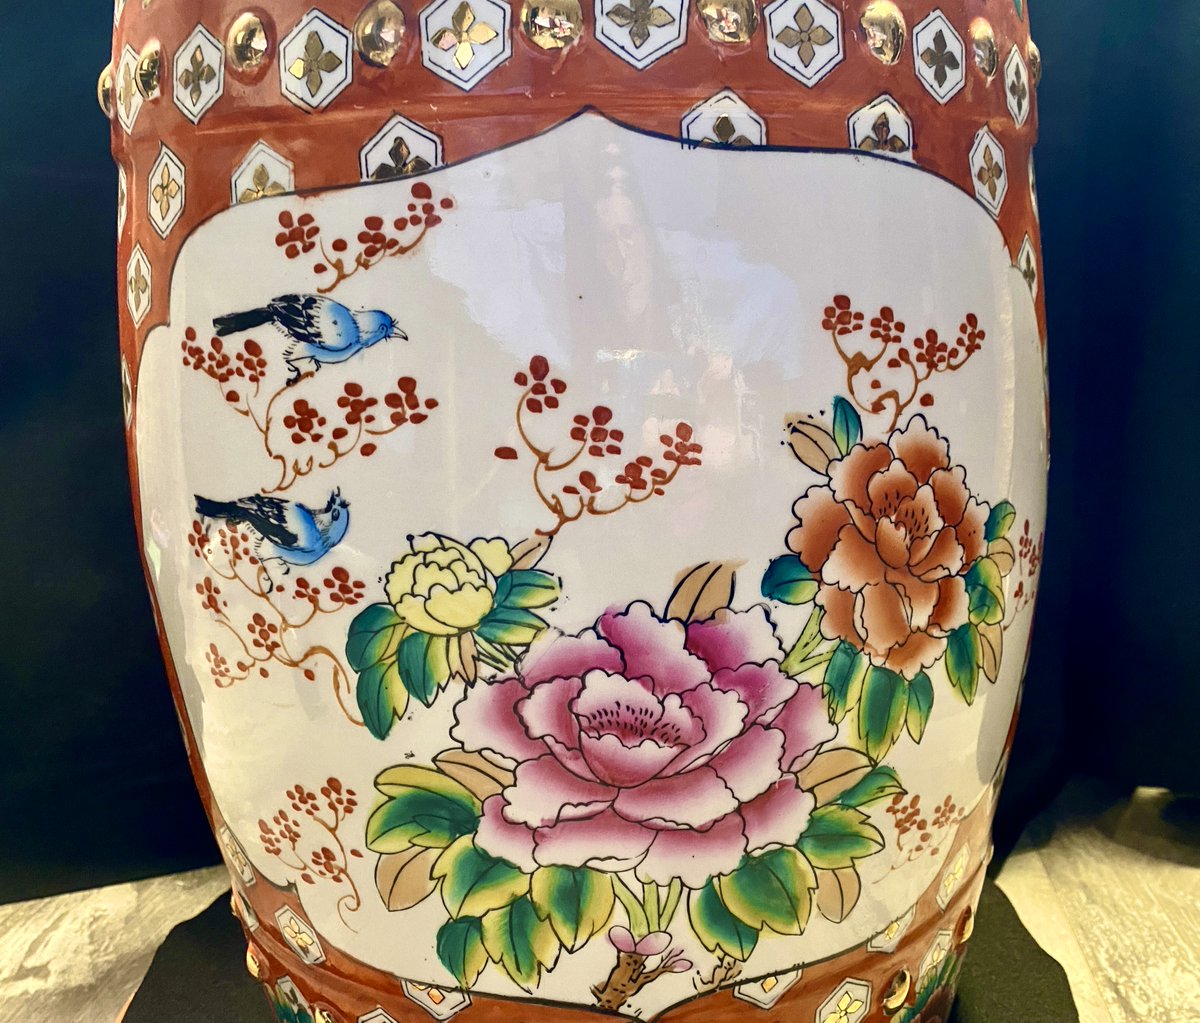 Vintage Chinese Ceramic Garden Stool Drum Table Peacock Floral Motif #vintage #Ceramic #Garden #stool #drum #table #peacock #floral #orange #gold #Chinese #Asian #Oriental #home #decor #ArtPottery #Pottery #MCM #midcentury #estate #collectibles etsy.me/3TPg5e0